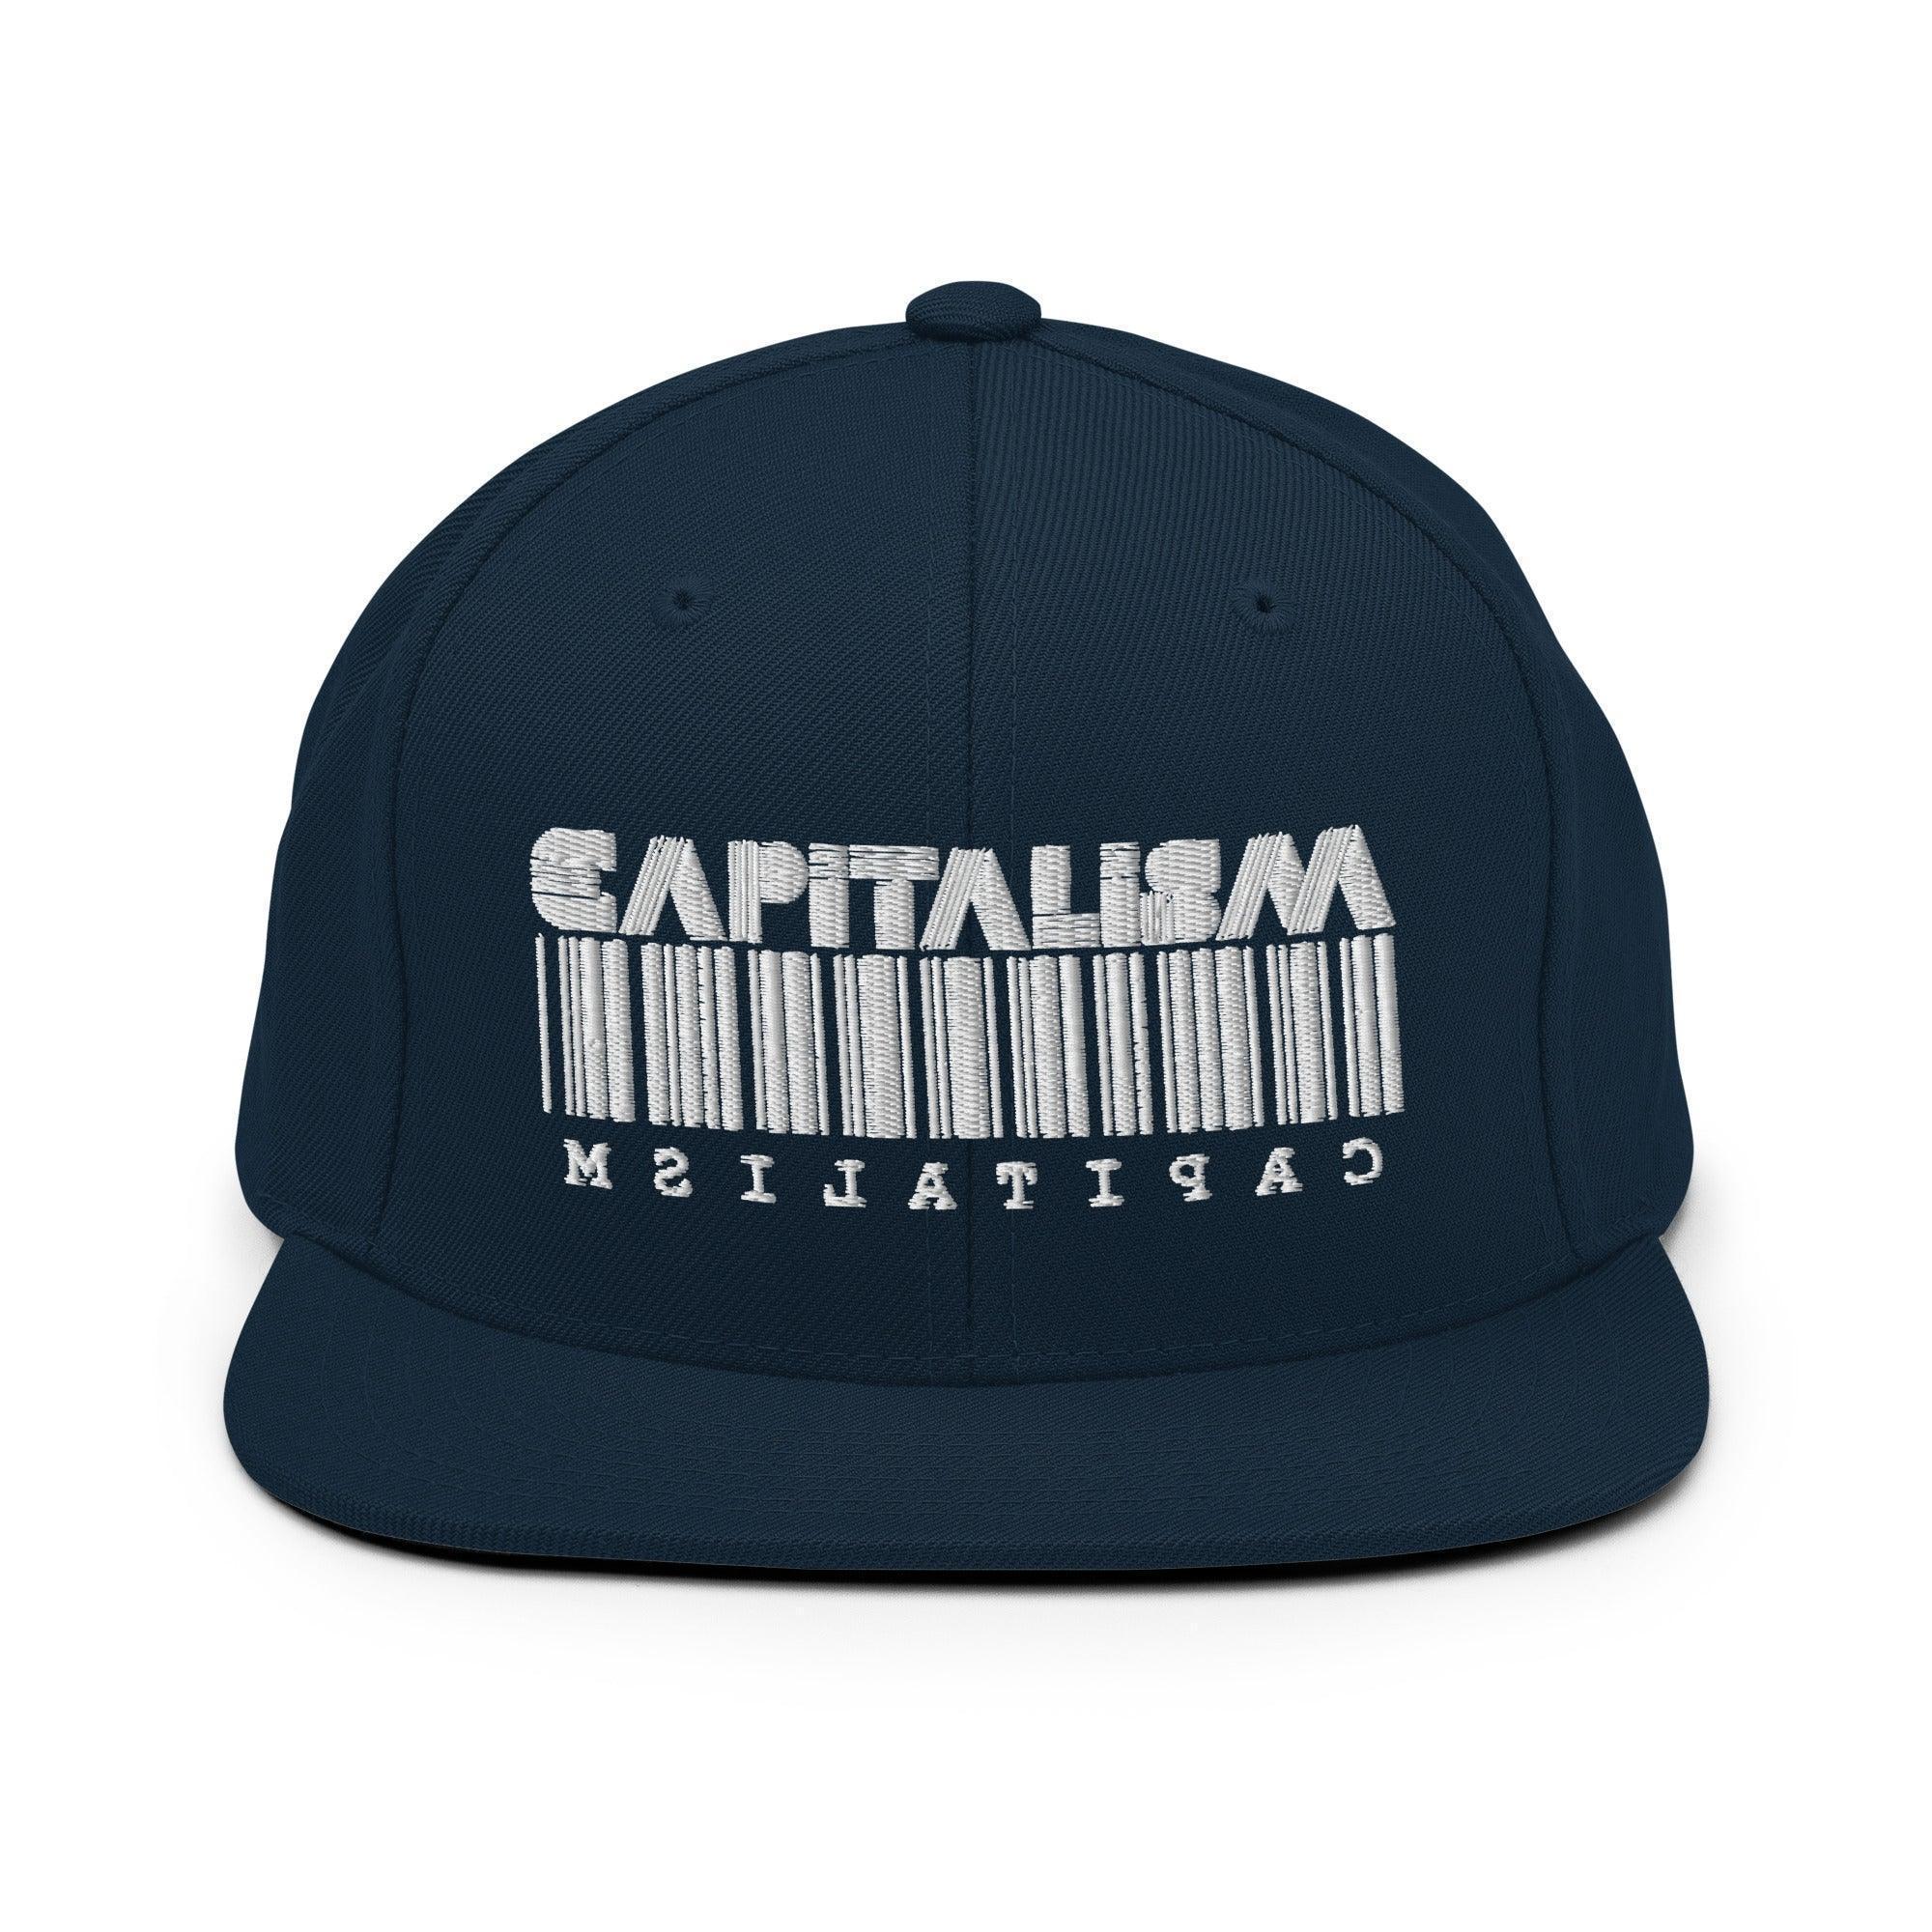 Capitalism Snapback Hat - InvestmenTees